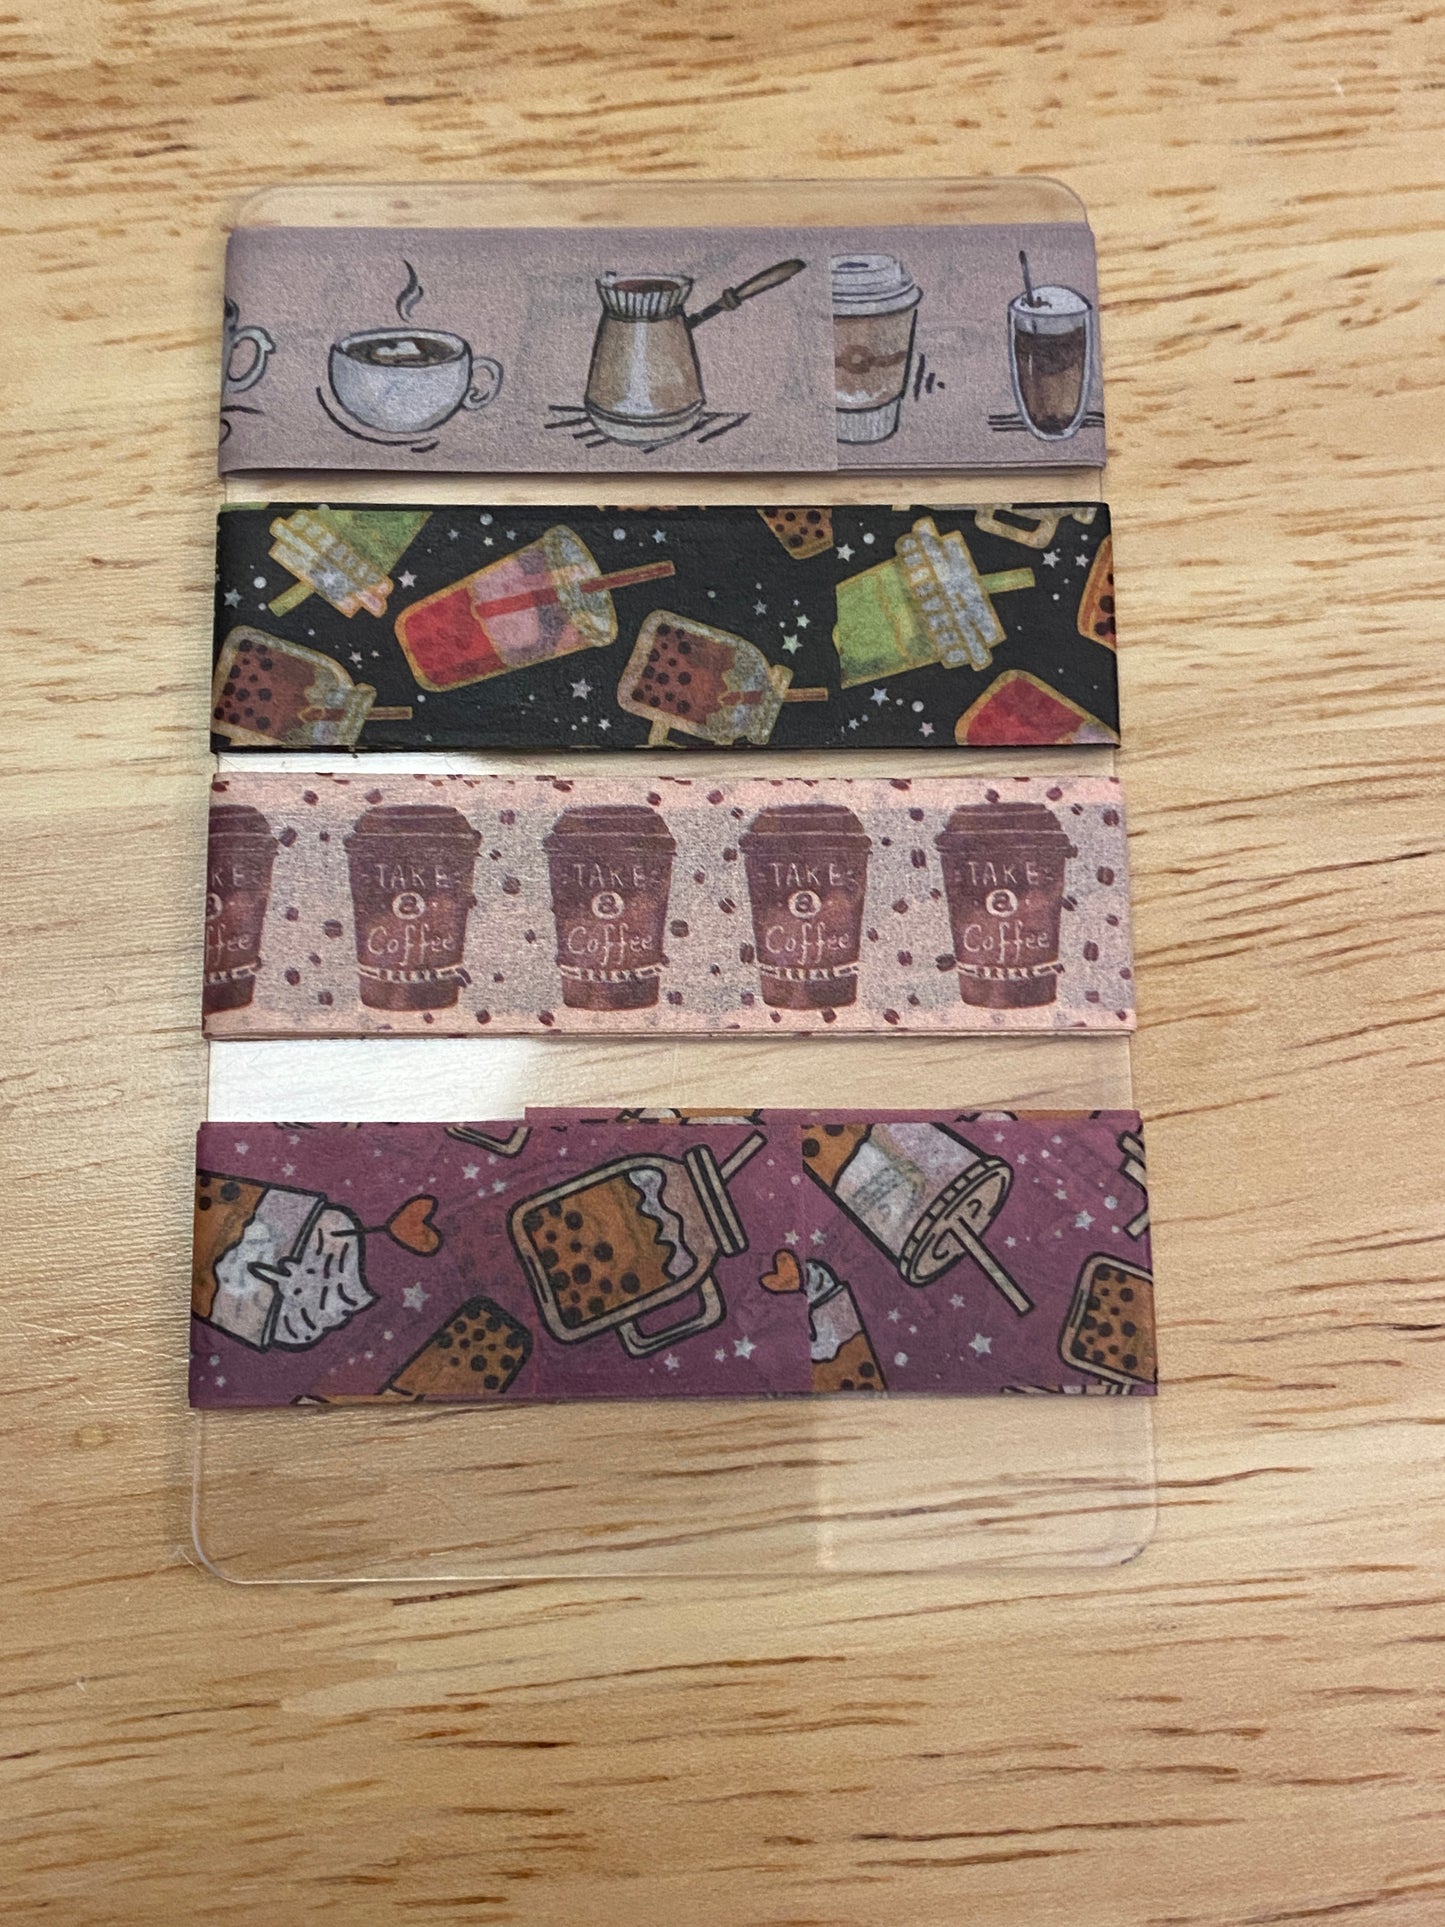 4 Coffee and Iced Coffee Washi Tape Samples on Card